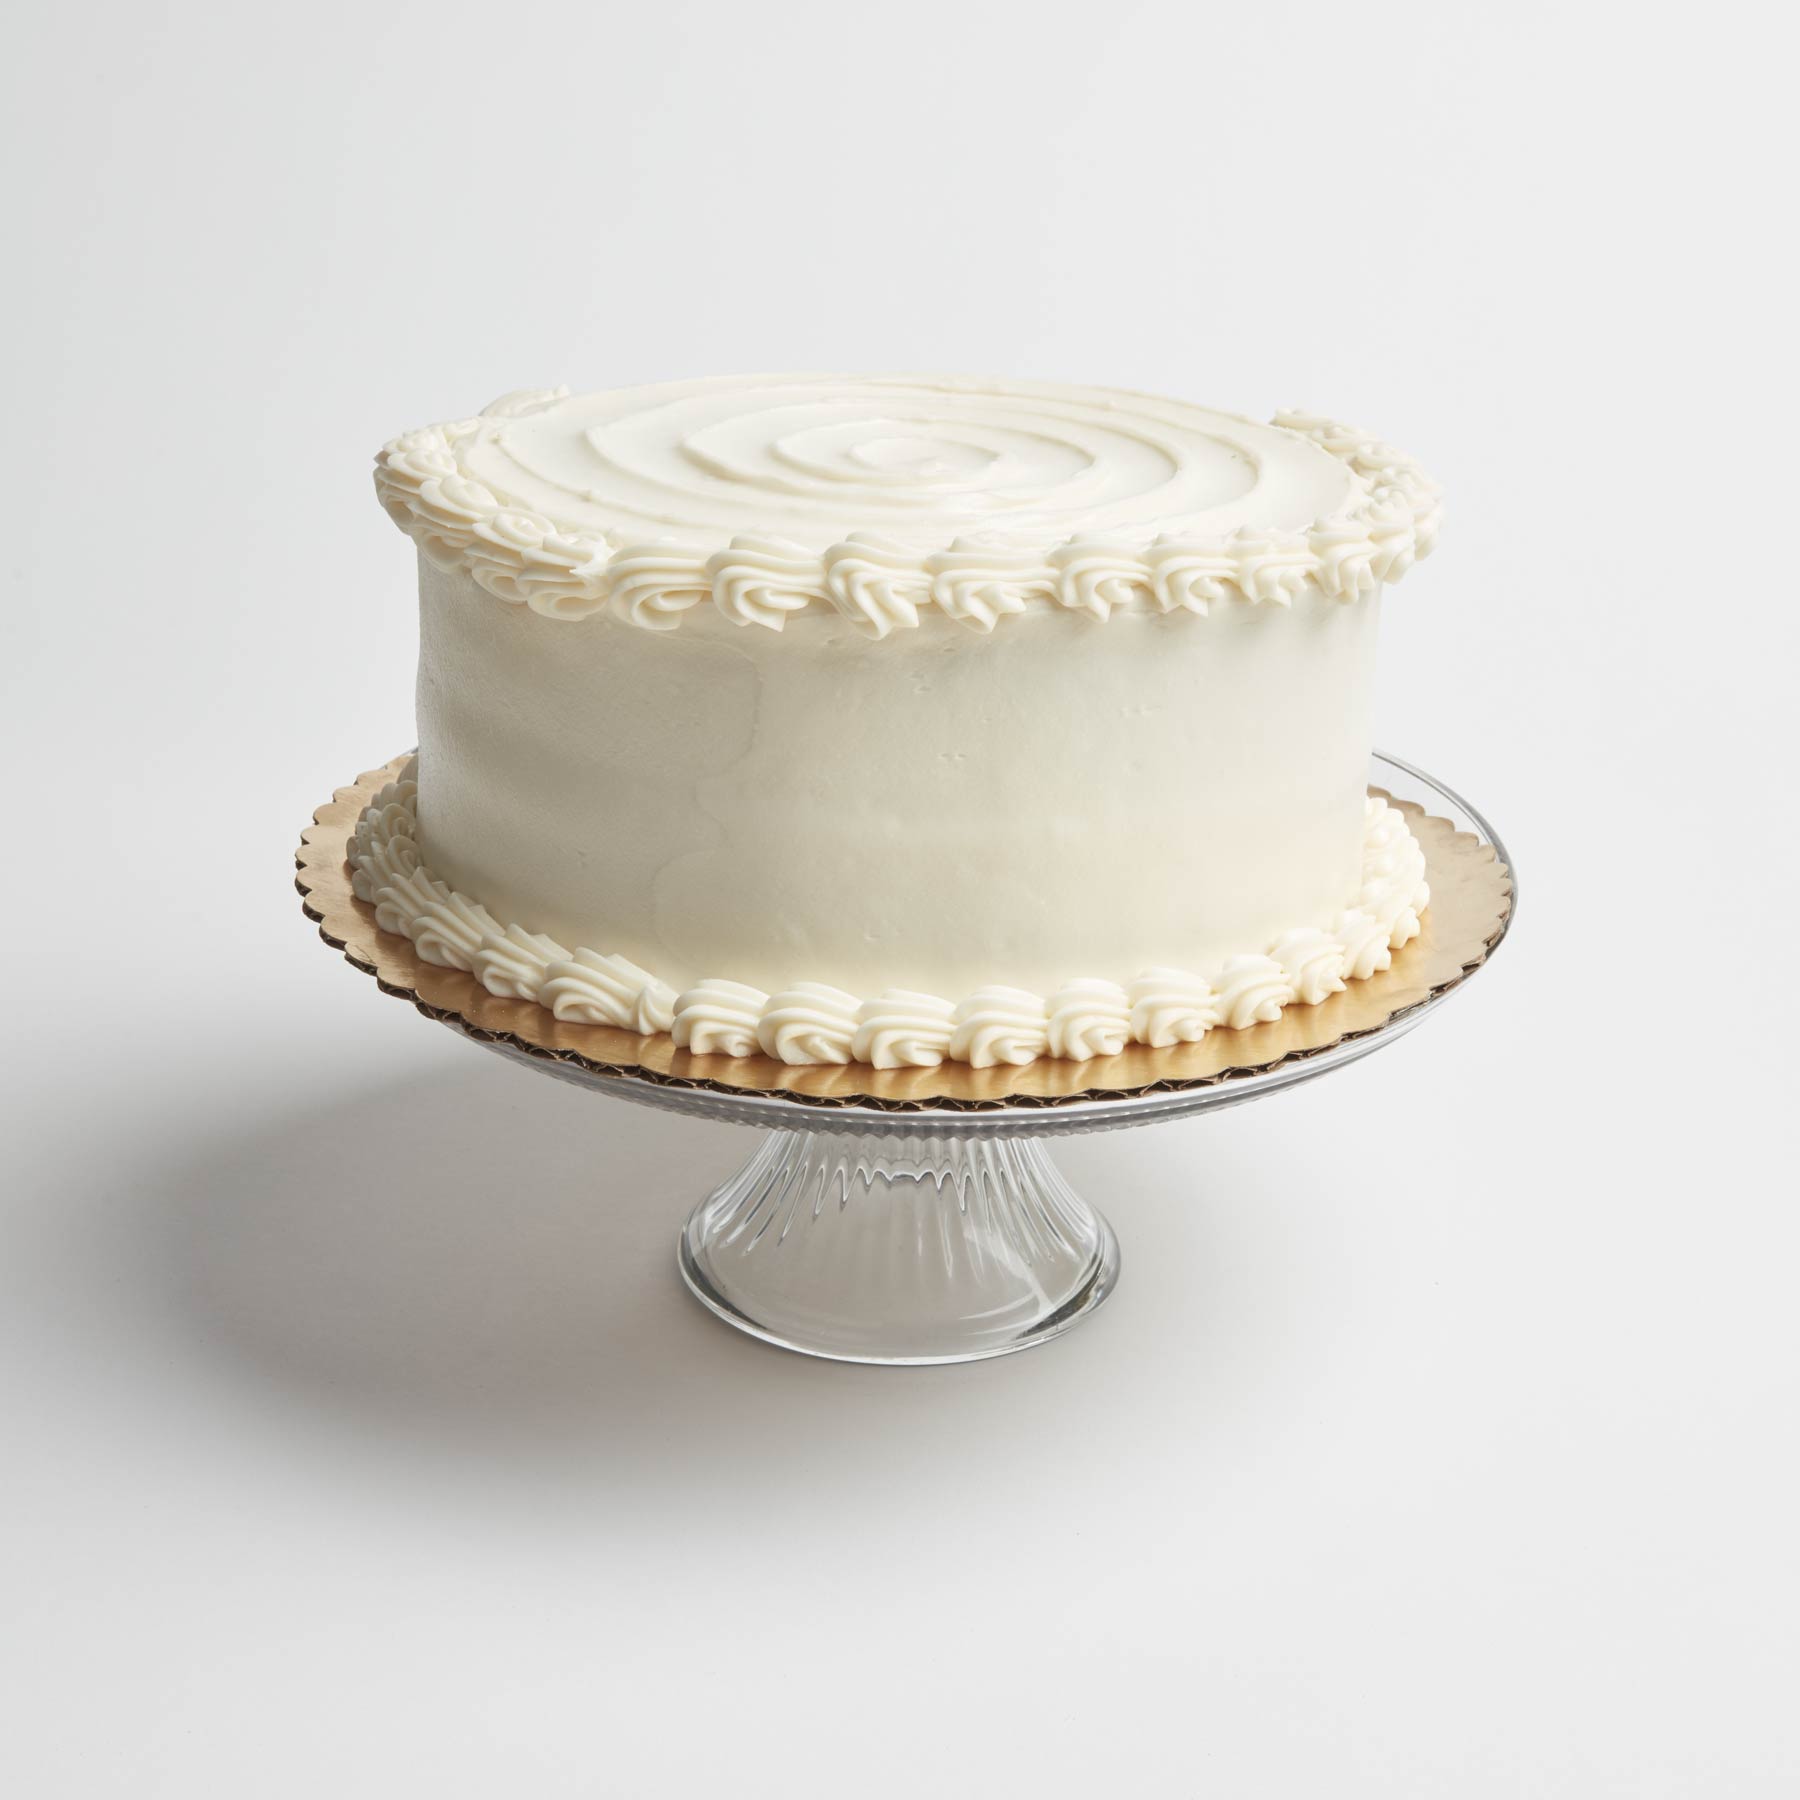 cocomelon #birthday #cake #buttercream #happybirthday #bronx #bakery #party  #kidsofinstagram #cakesofinstagram #instacakes #nyc | Instagram